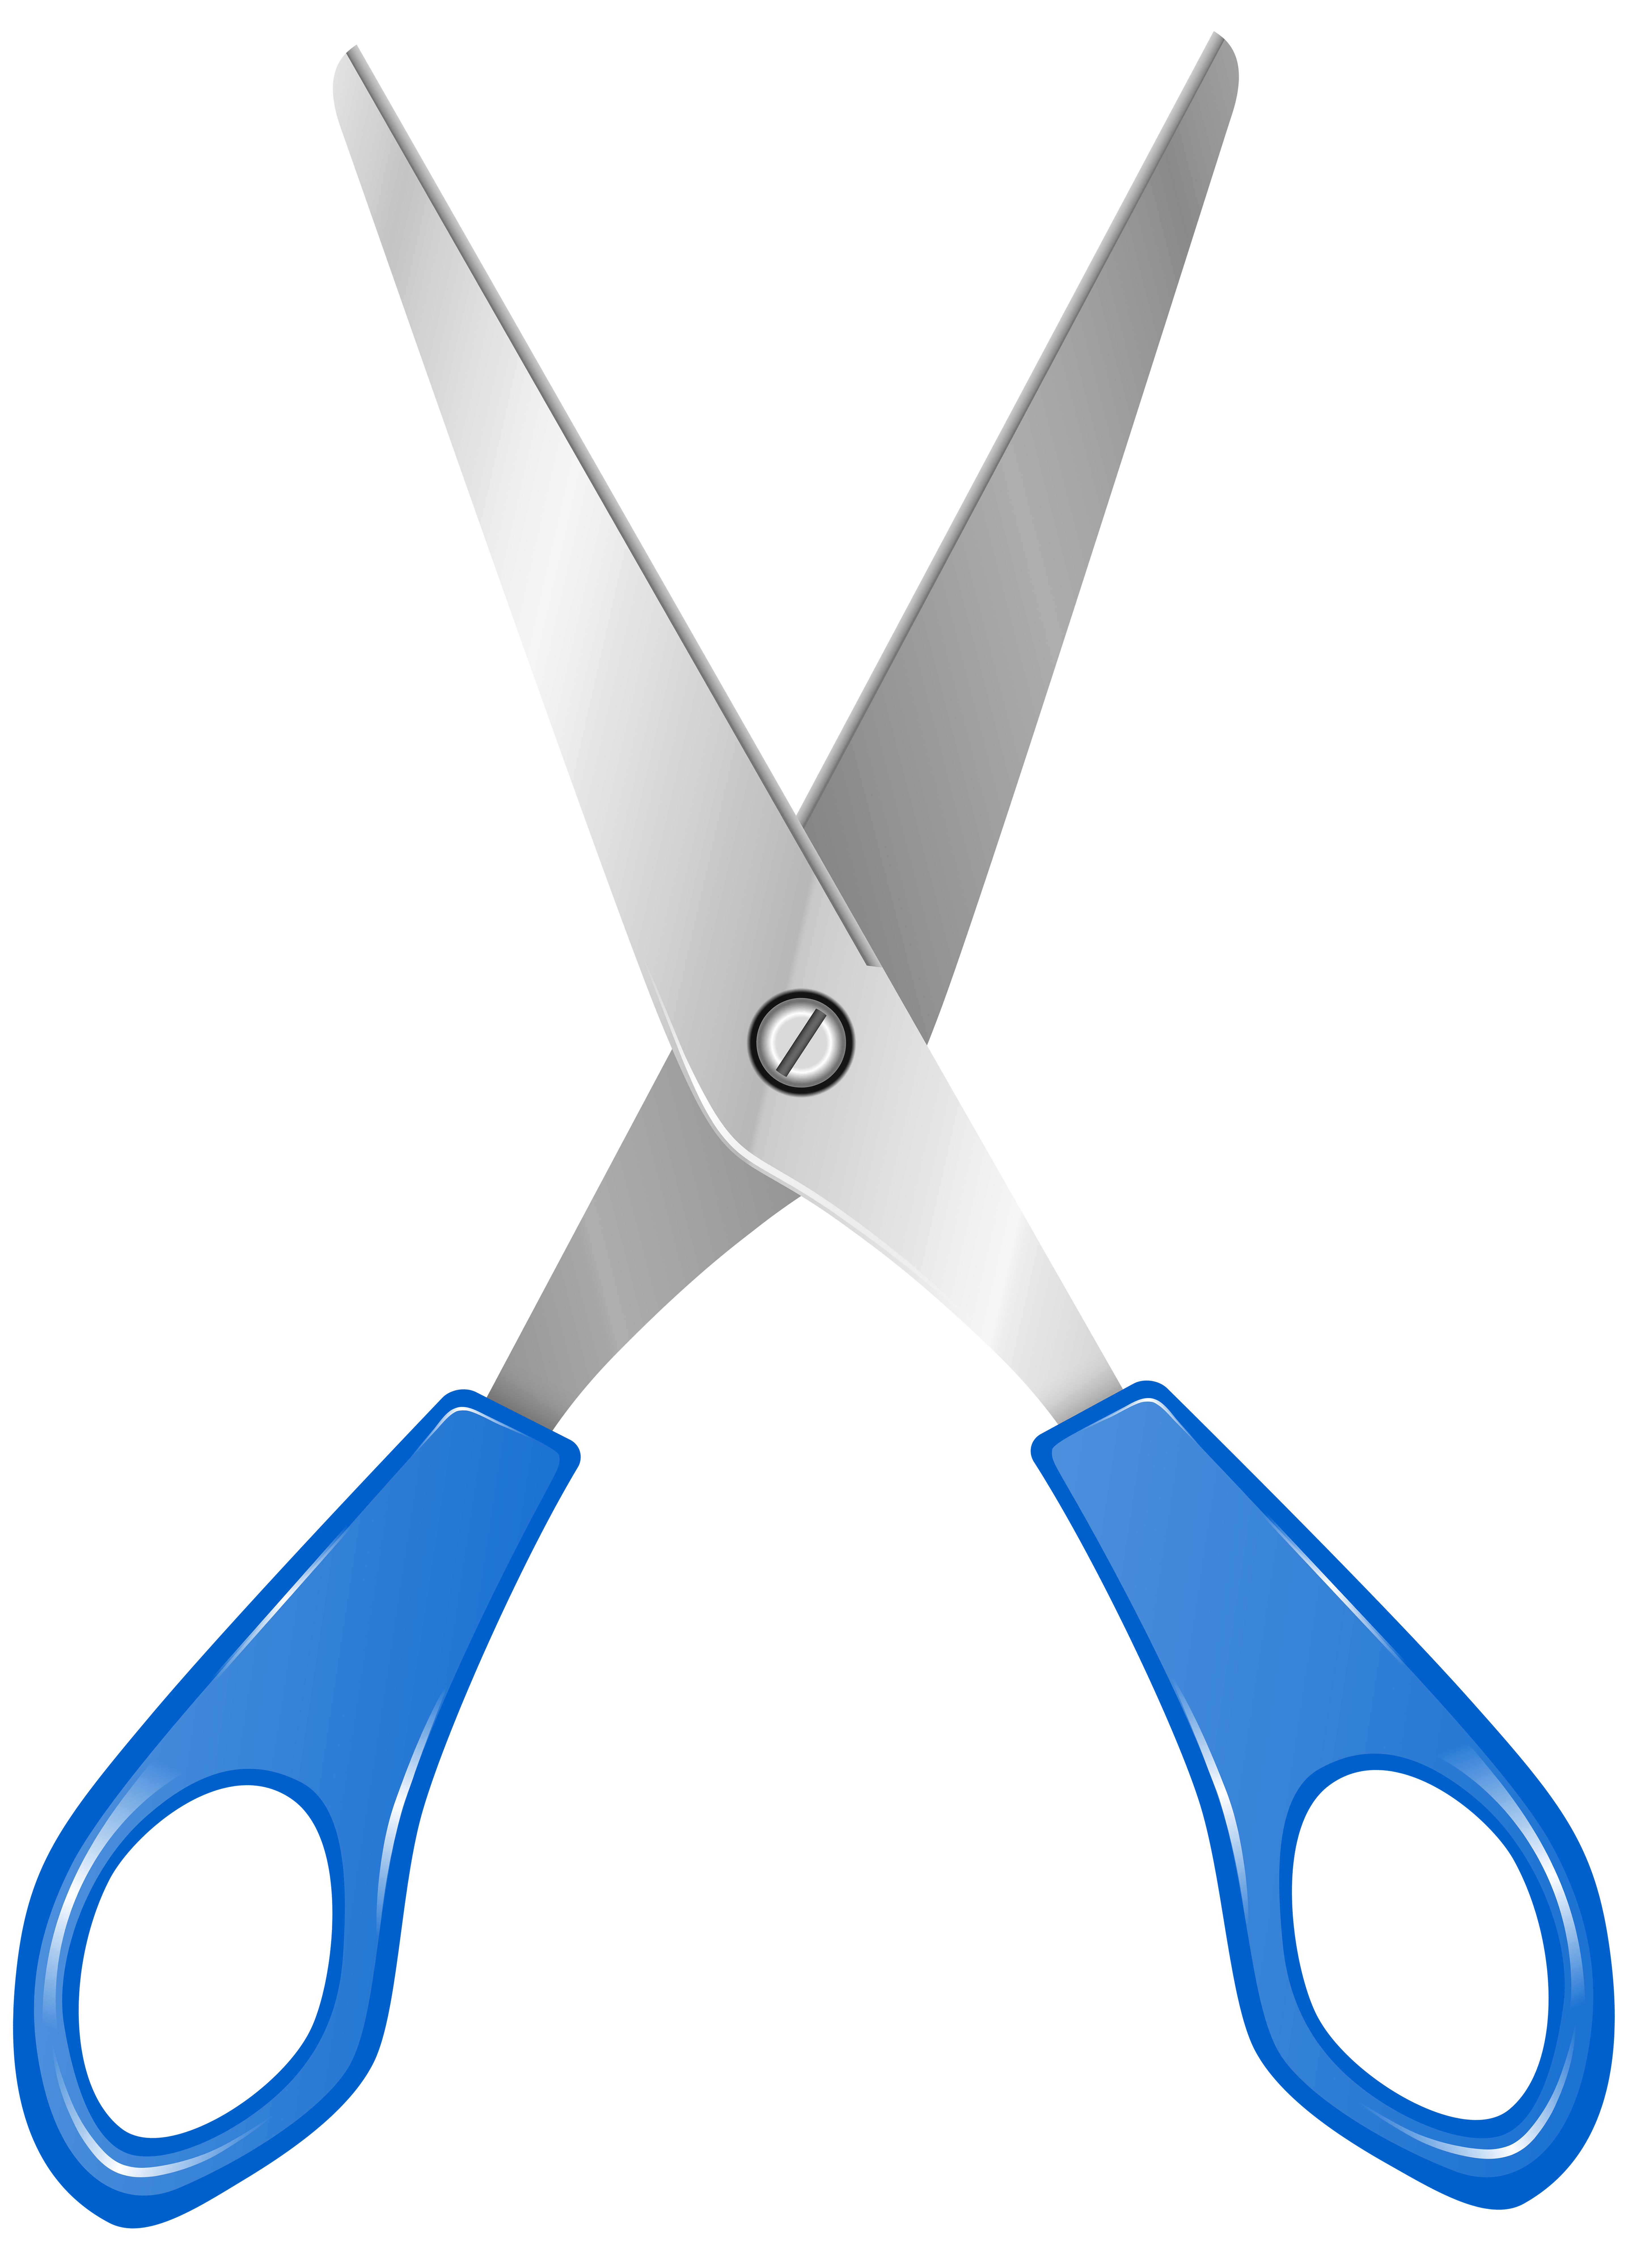 scissors clipart in word - photo #48